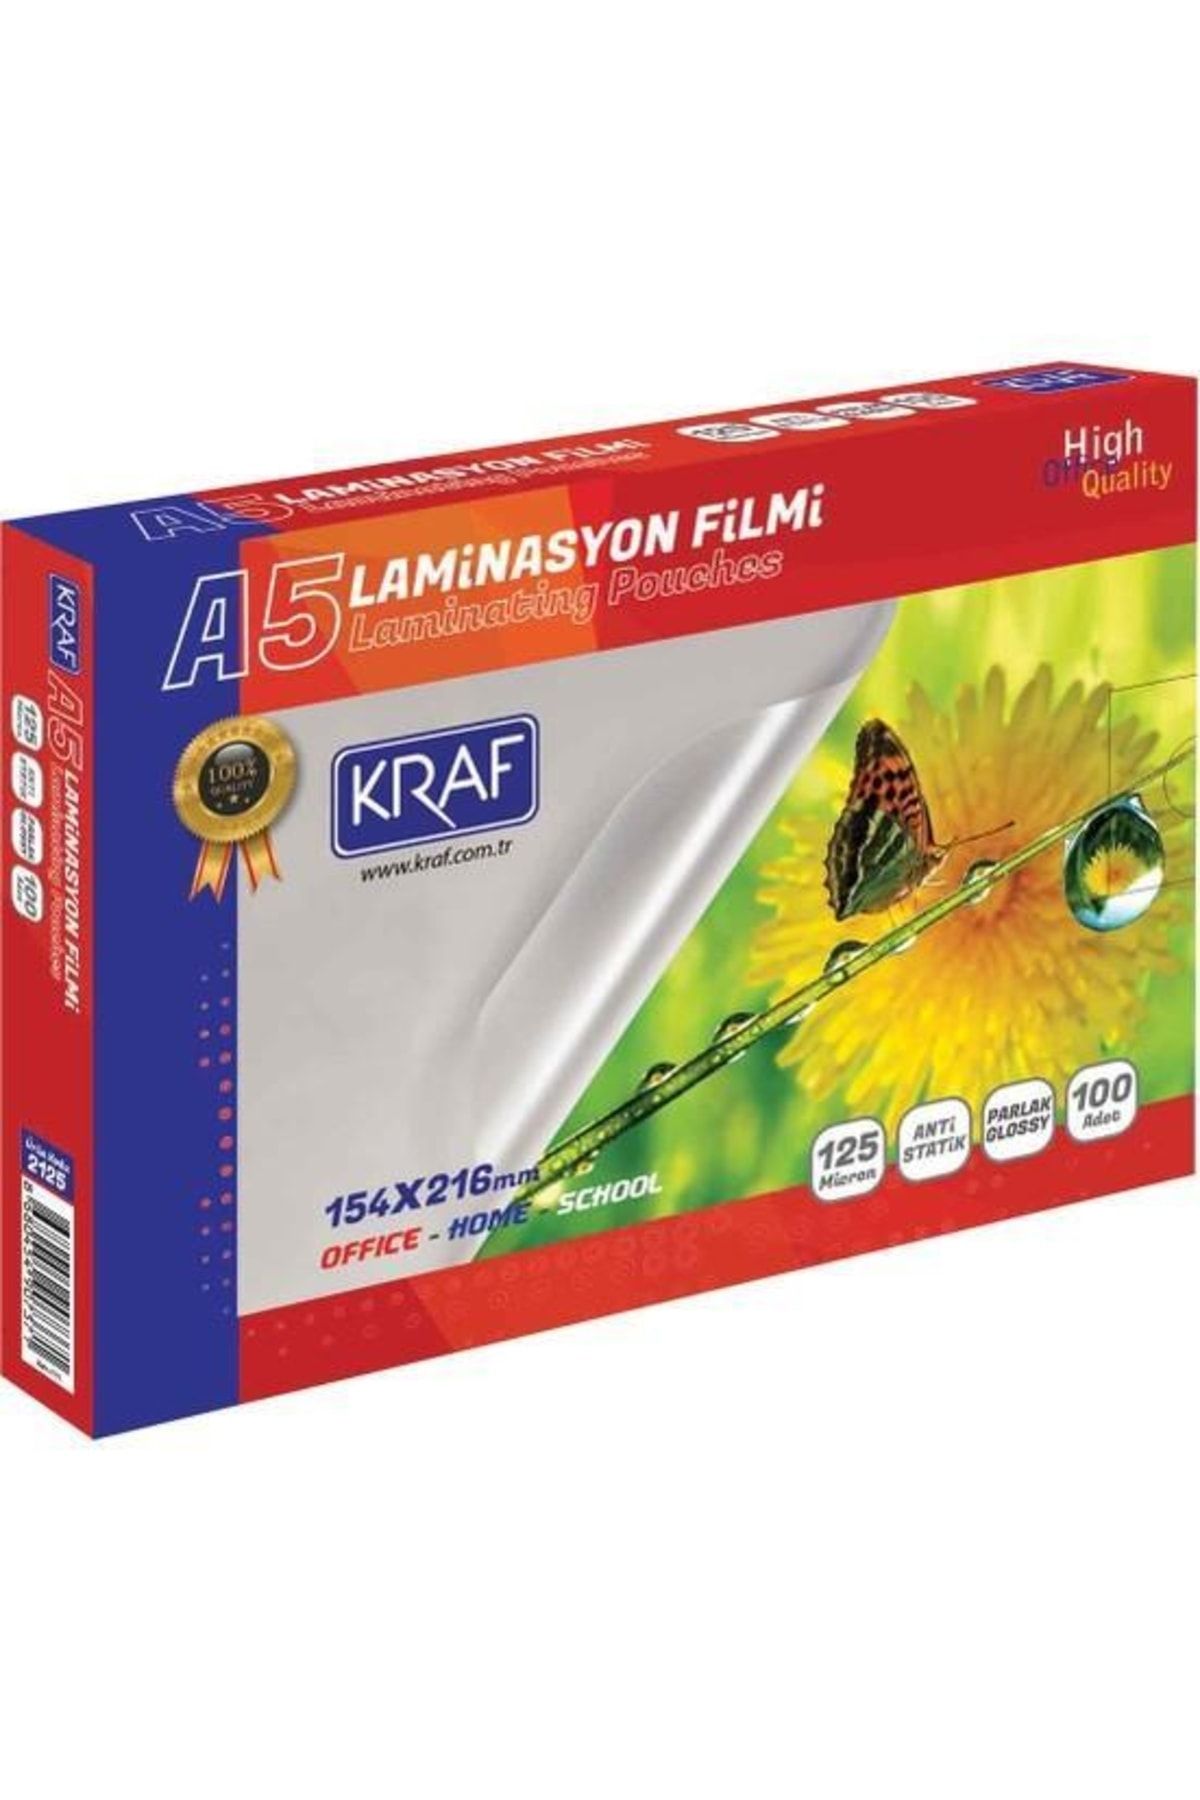 KRAF Laminasyon Filmi Parlak A5 100'lü 125 Micron 2125